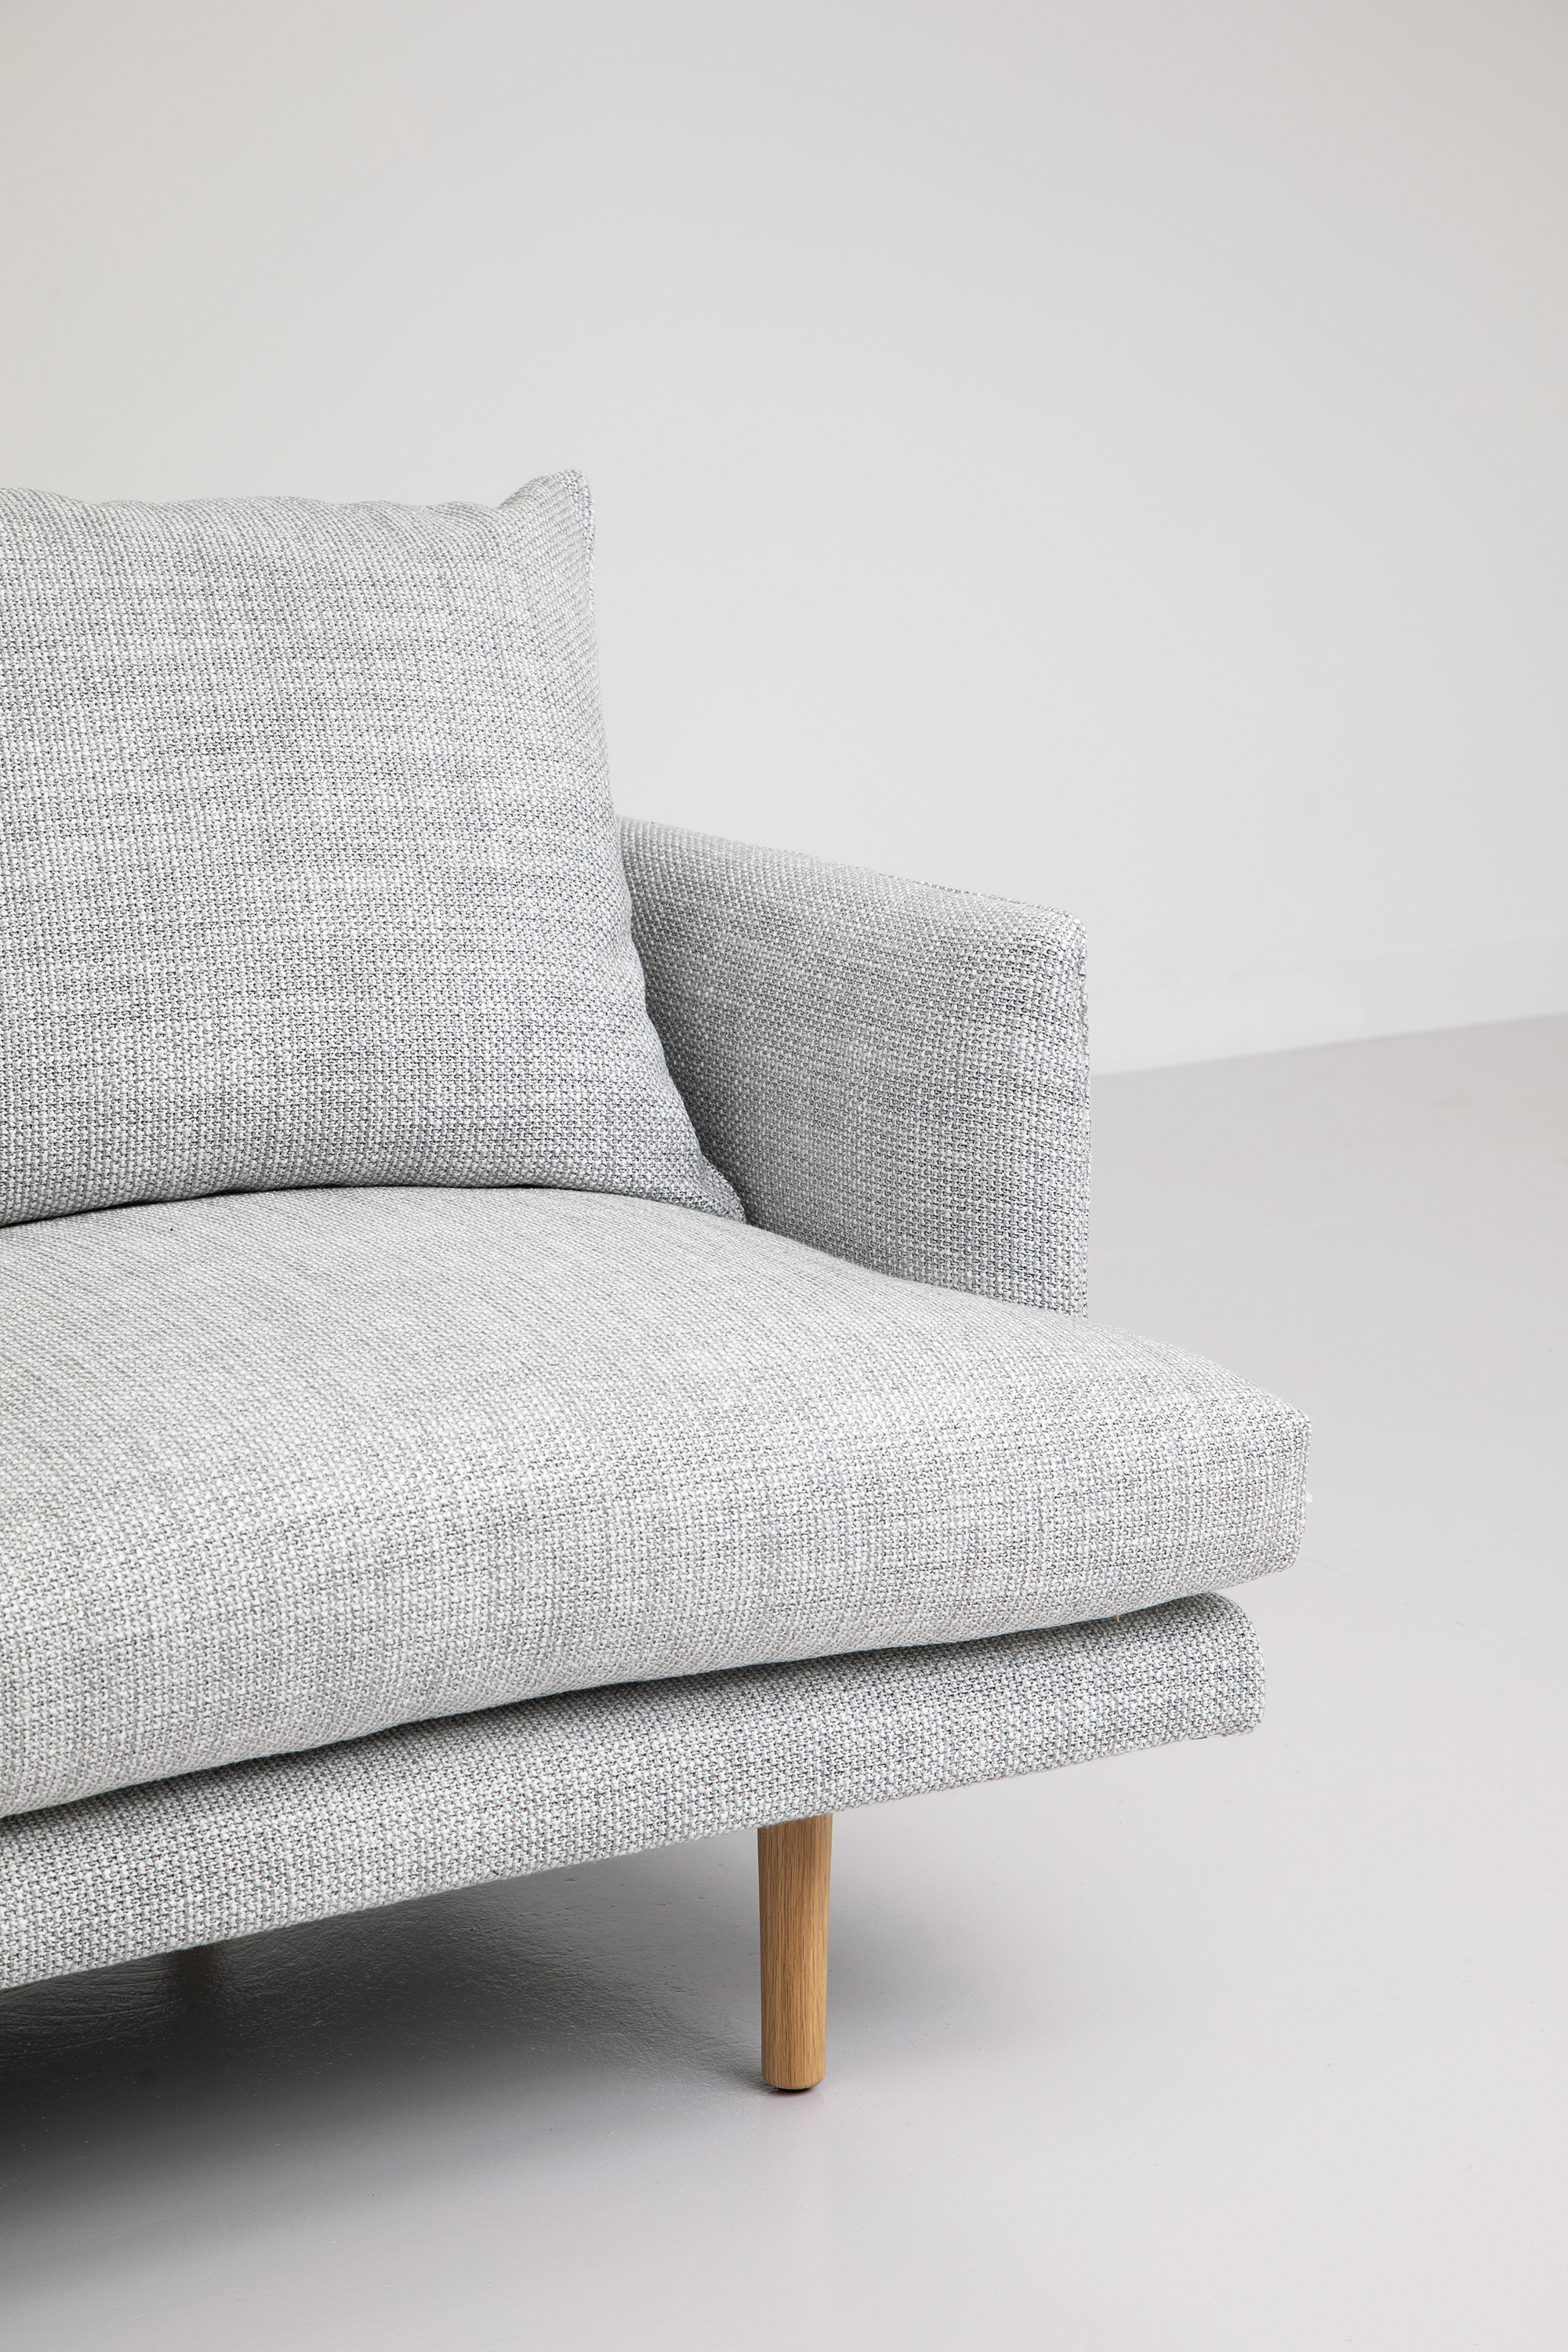 Jardan Nook Sofa Charlie Grey Fabric 6